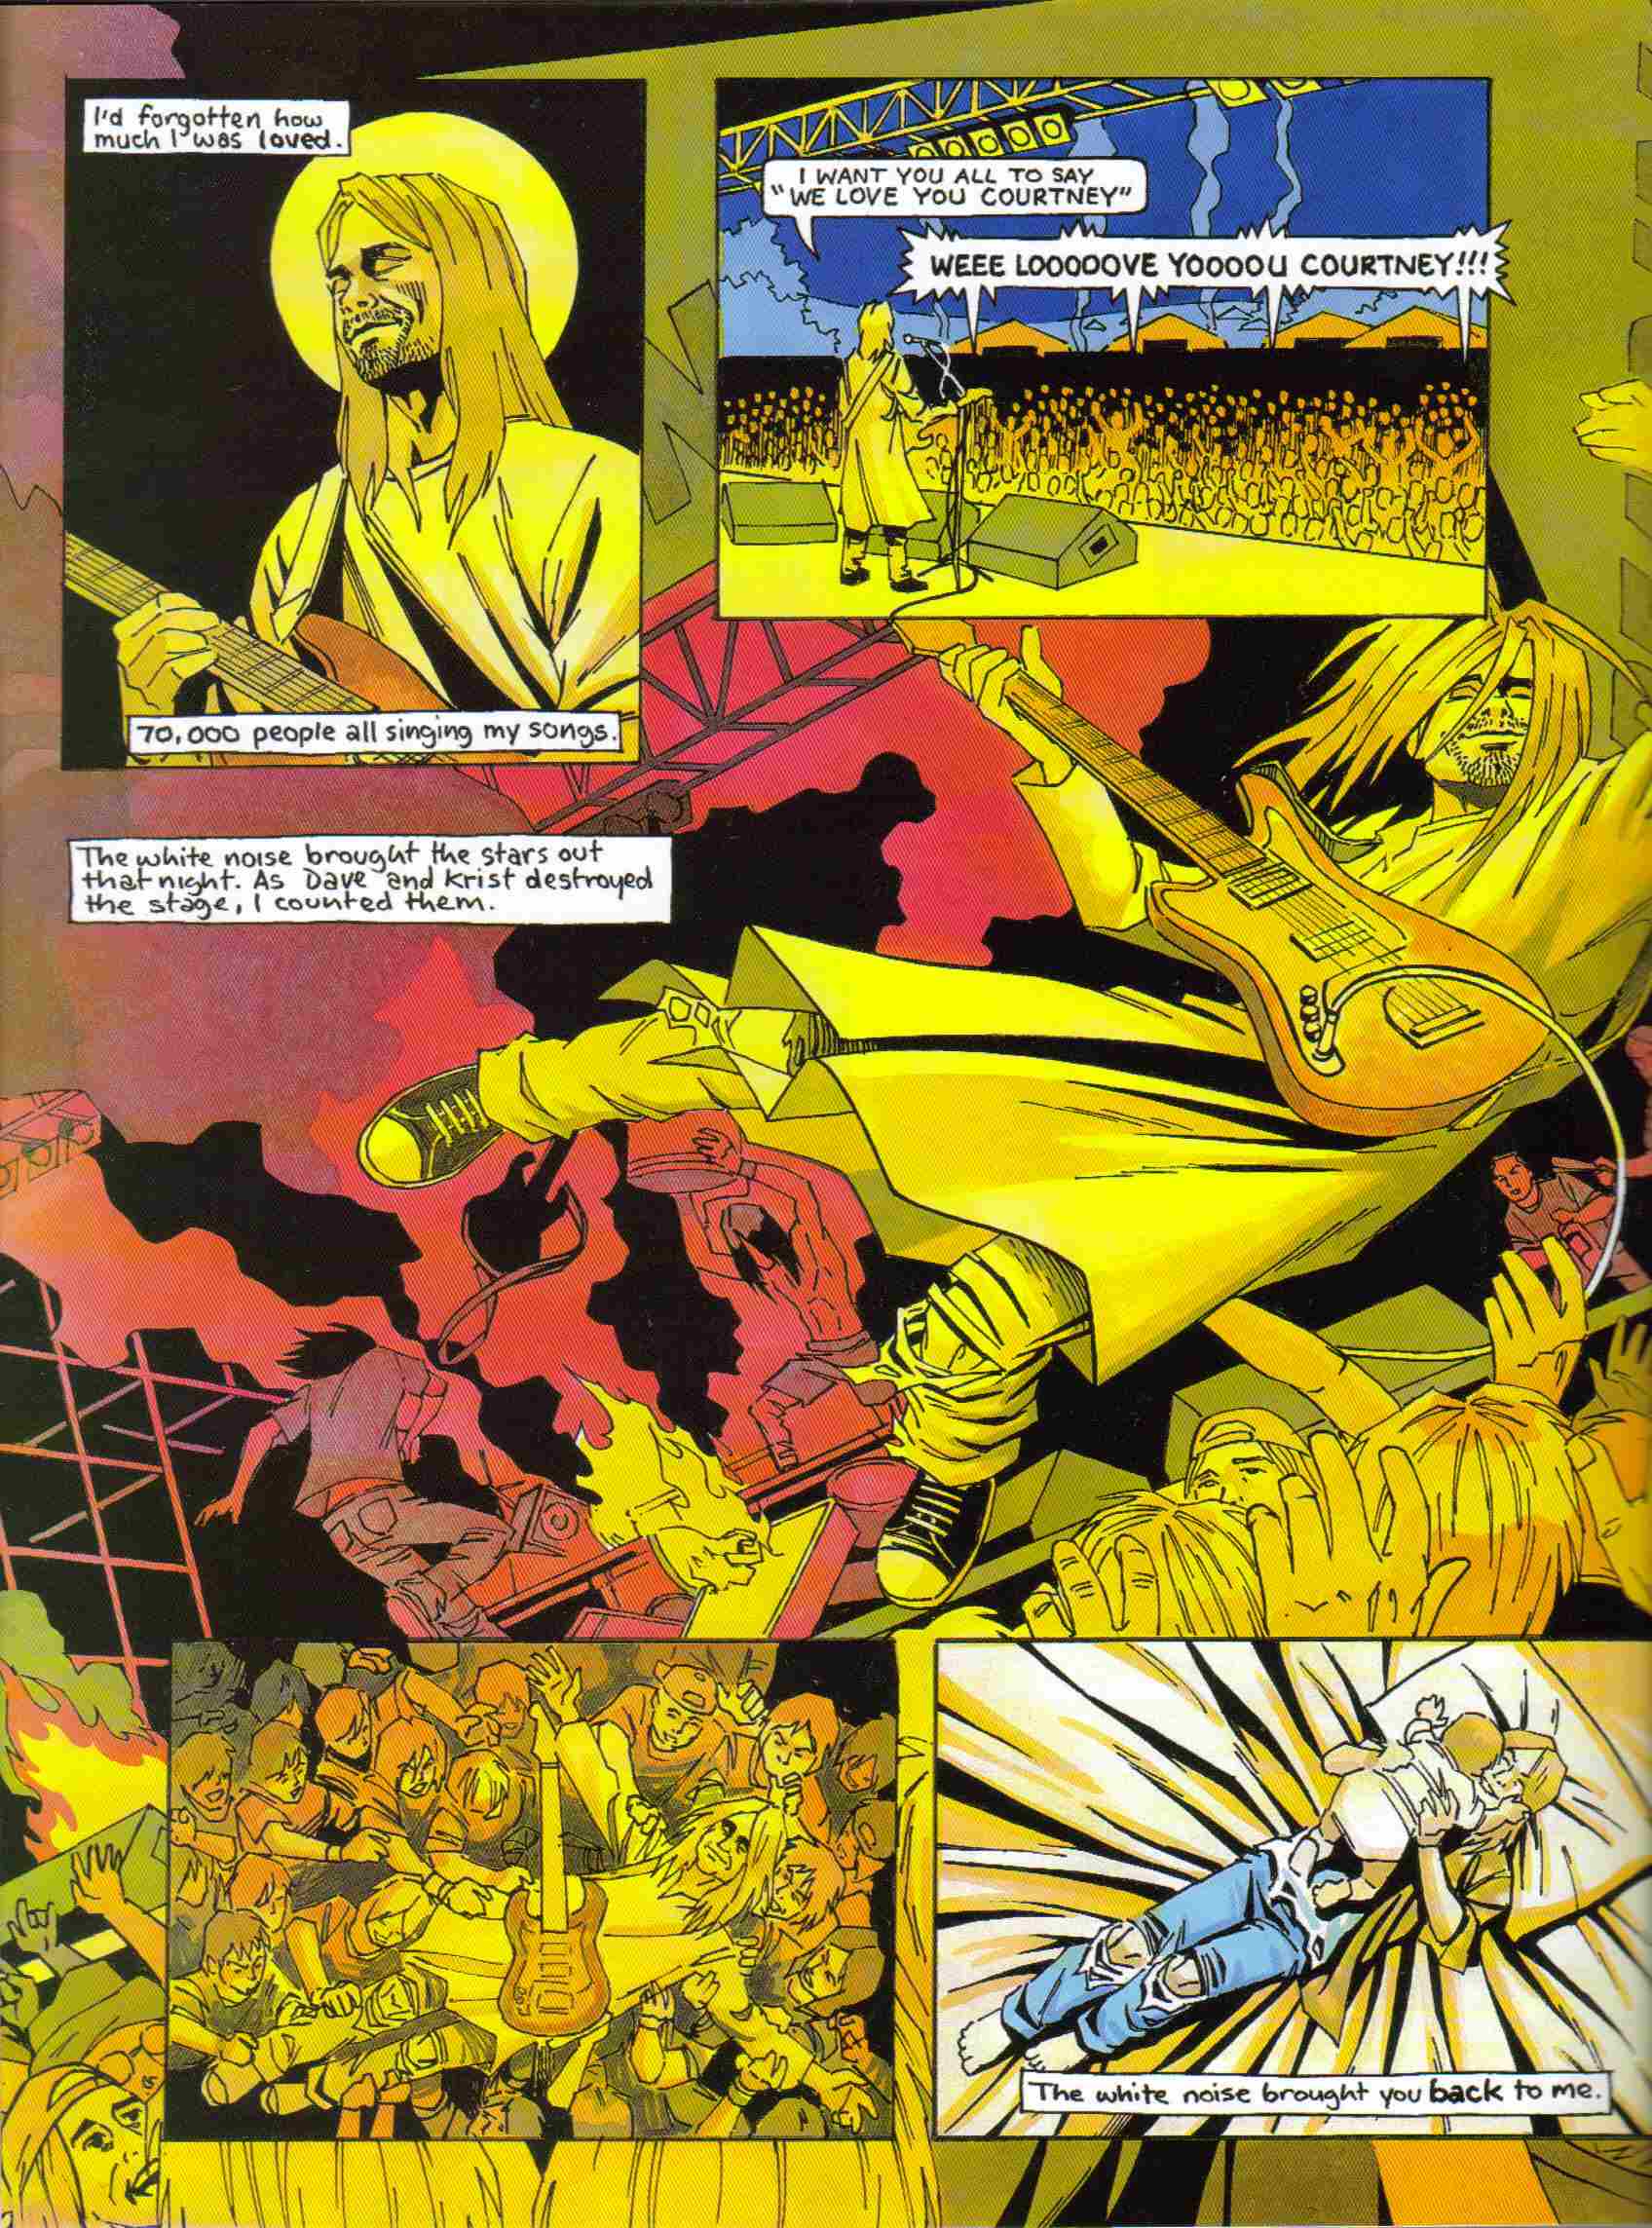 Read online GodSpeed: The Kurt Cobain Graphic comic -  Issue # TPB - 73